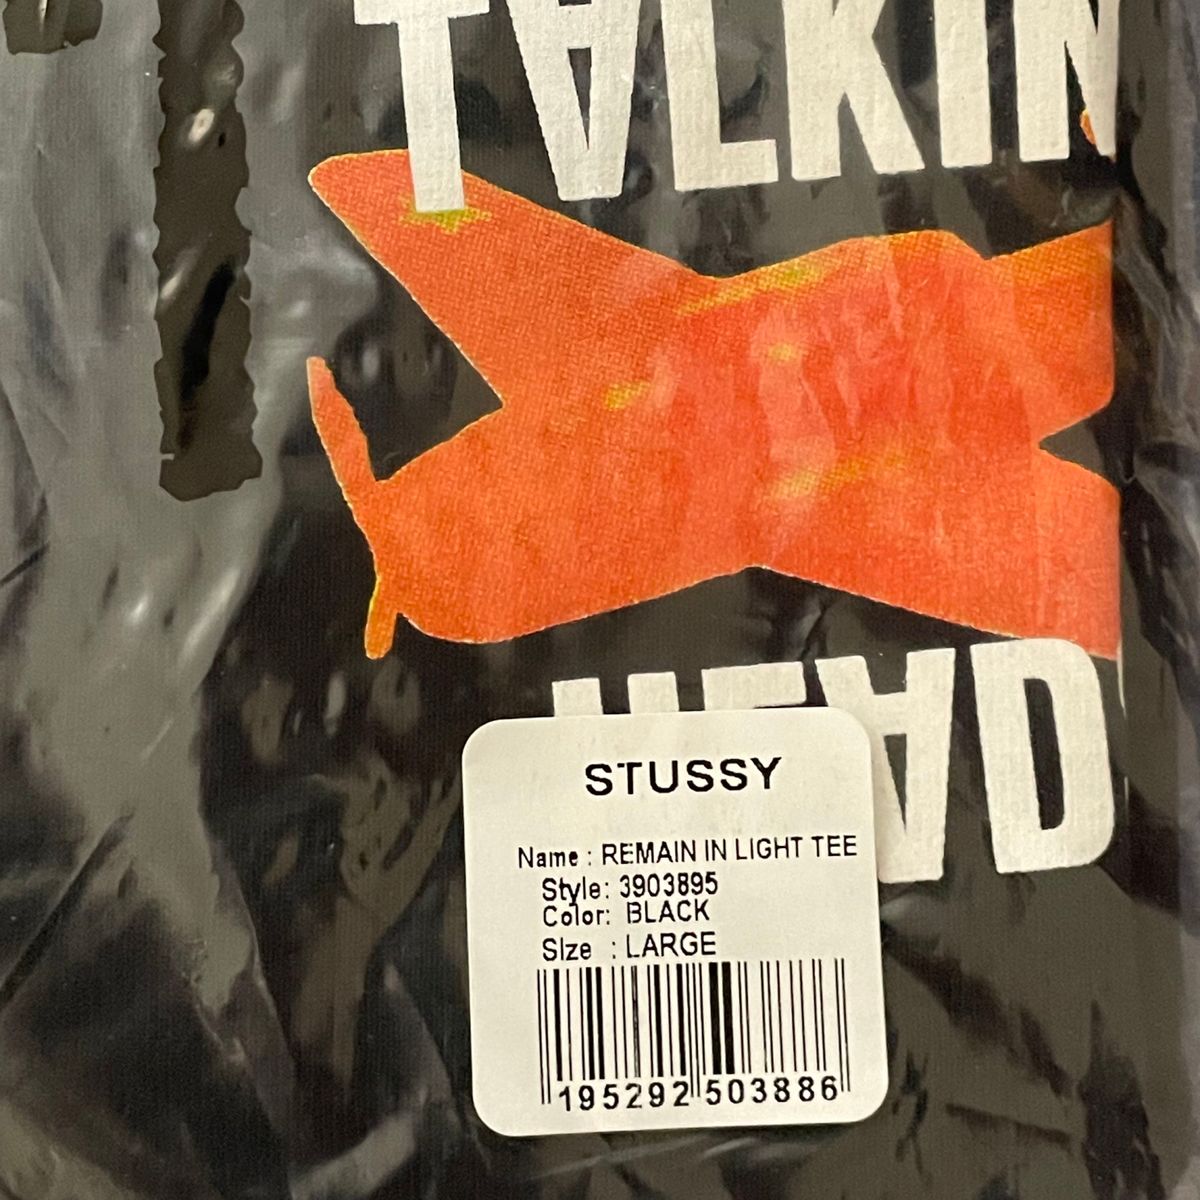 Stussy x Talking Heads Remain in Light Tee Black